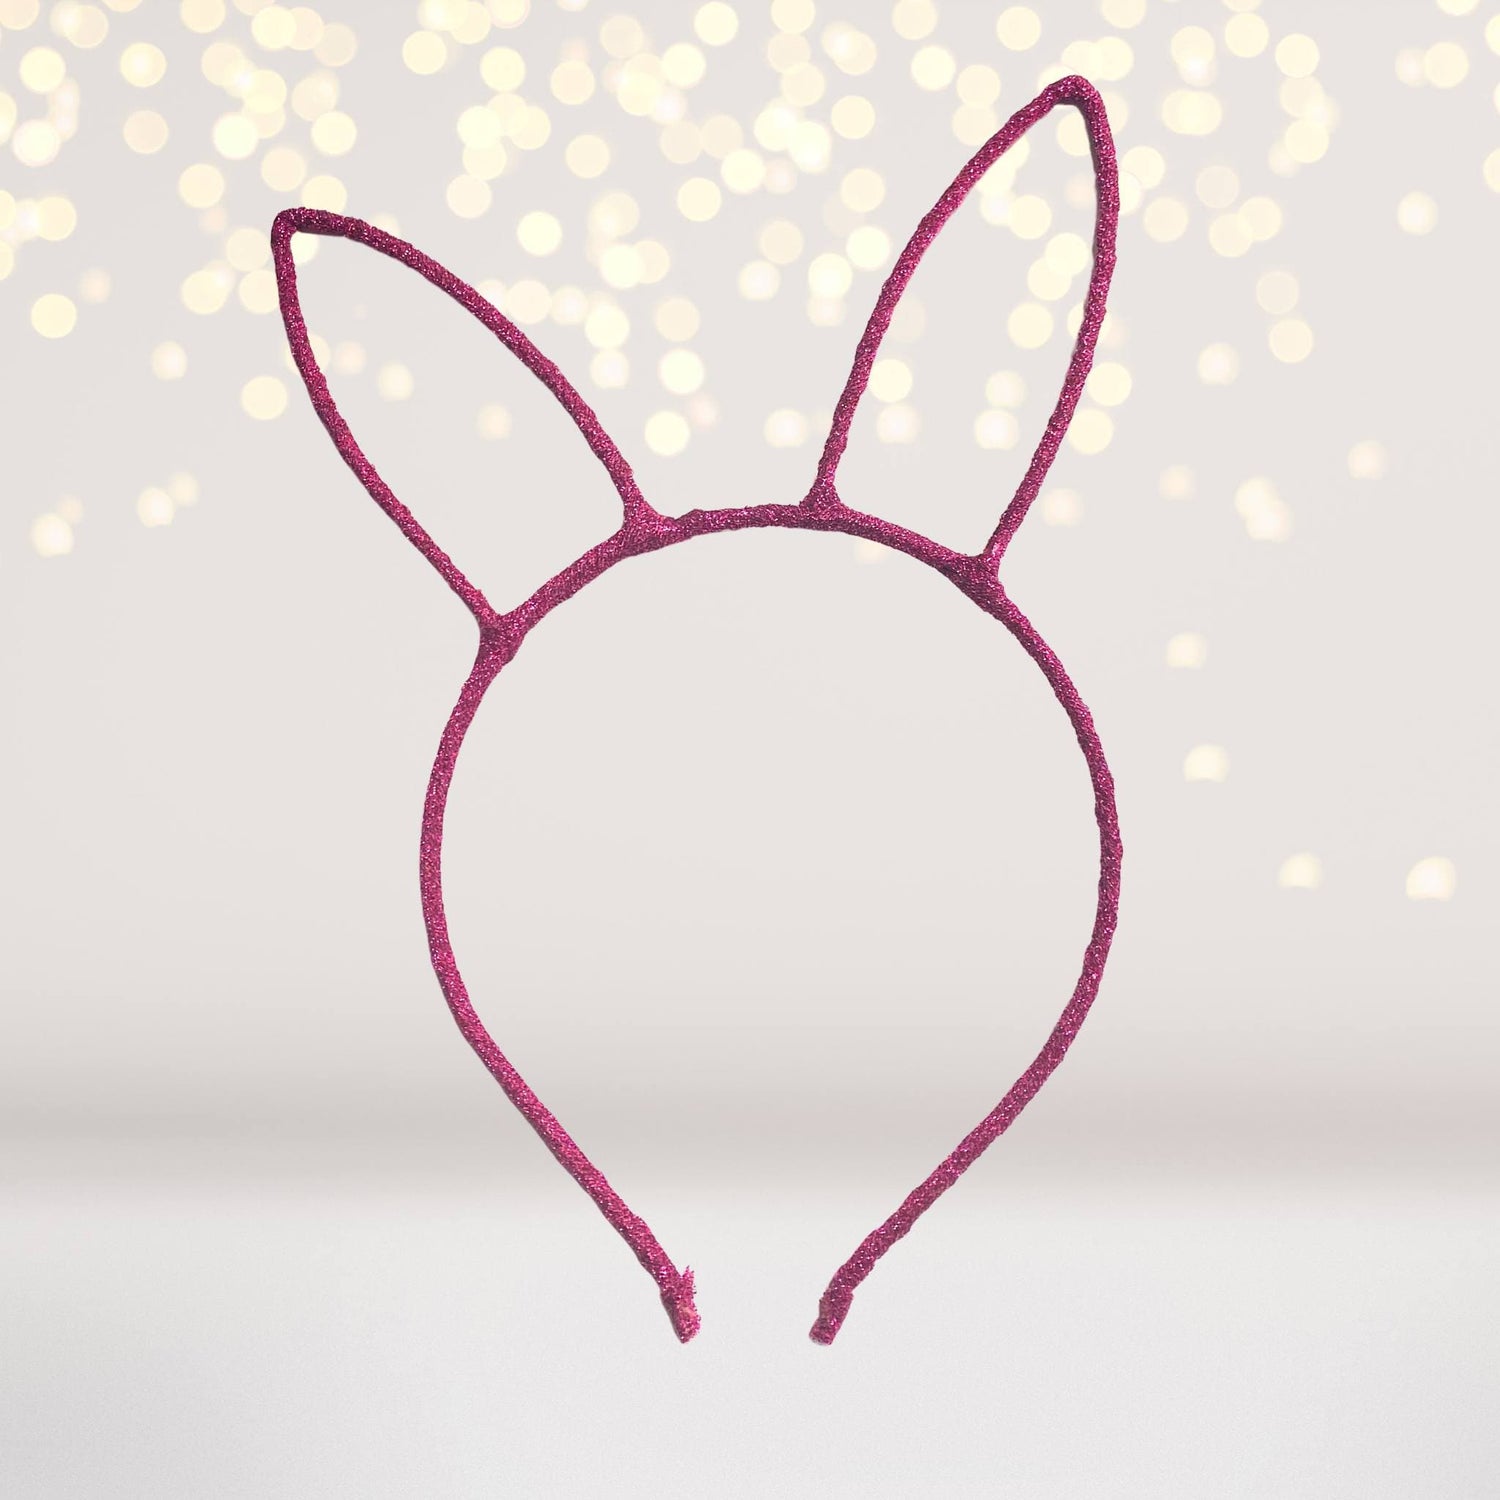 Headband - Simple Bunny Ear Headband